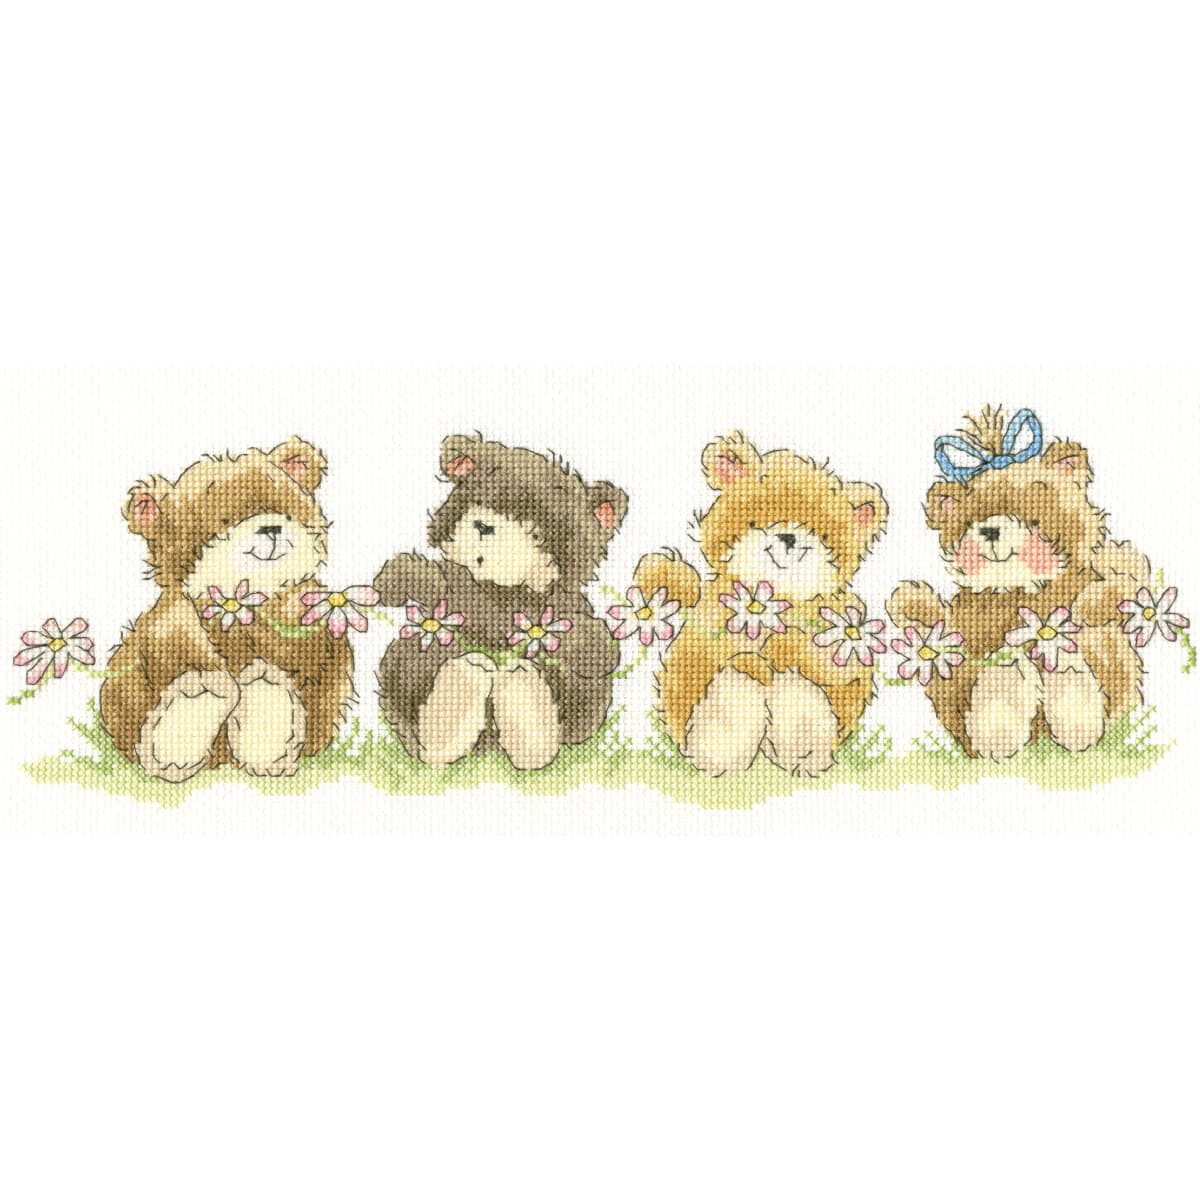 Four cute teddy bears are sitting in a row, each holding...